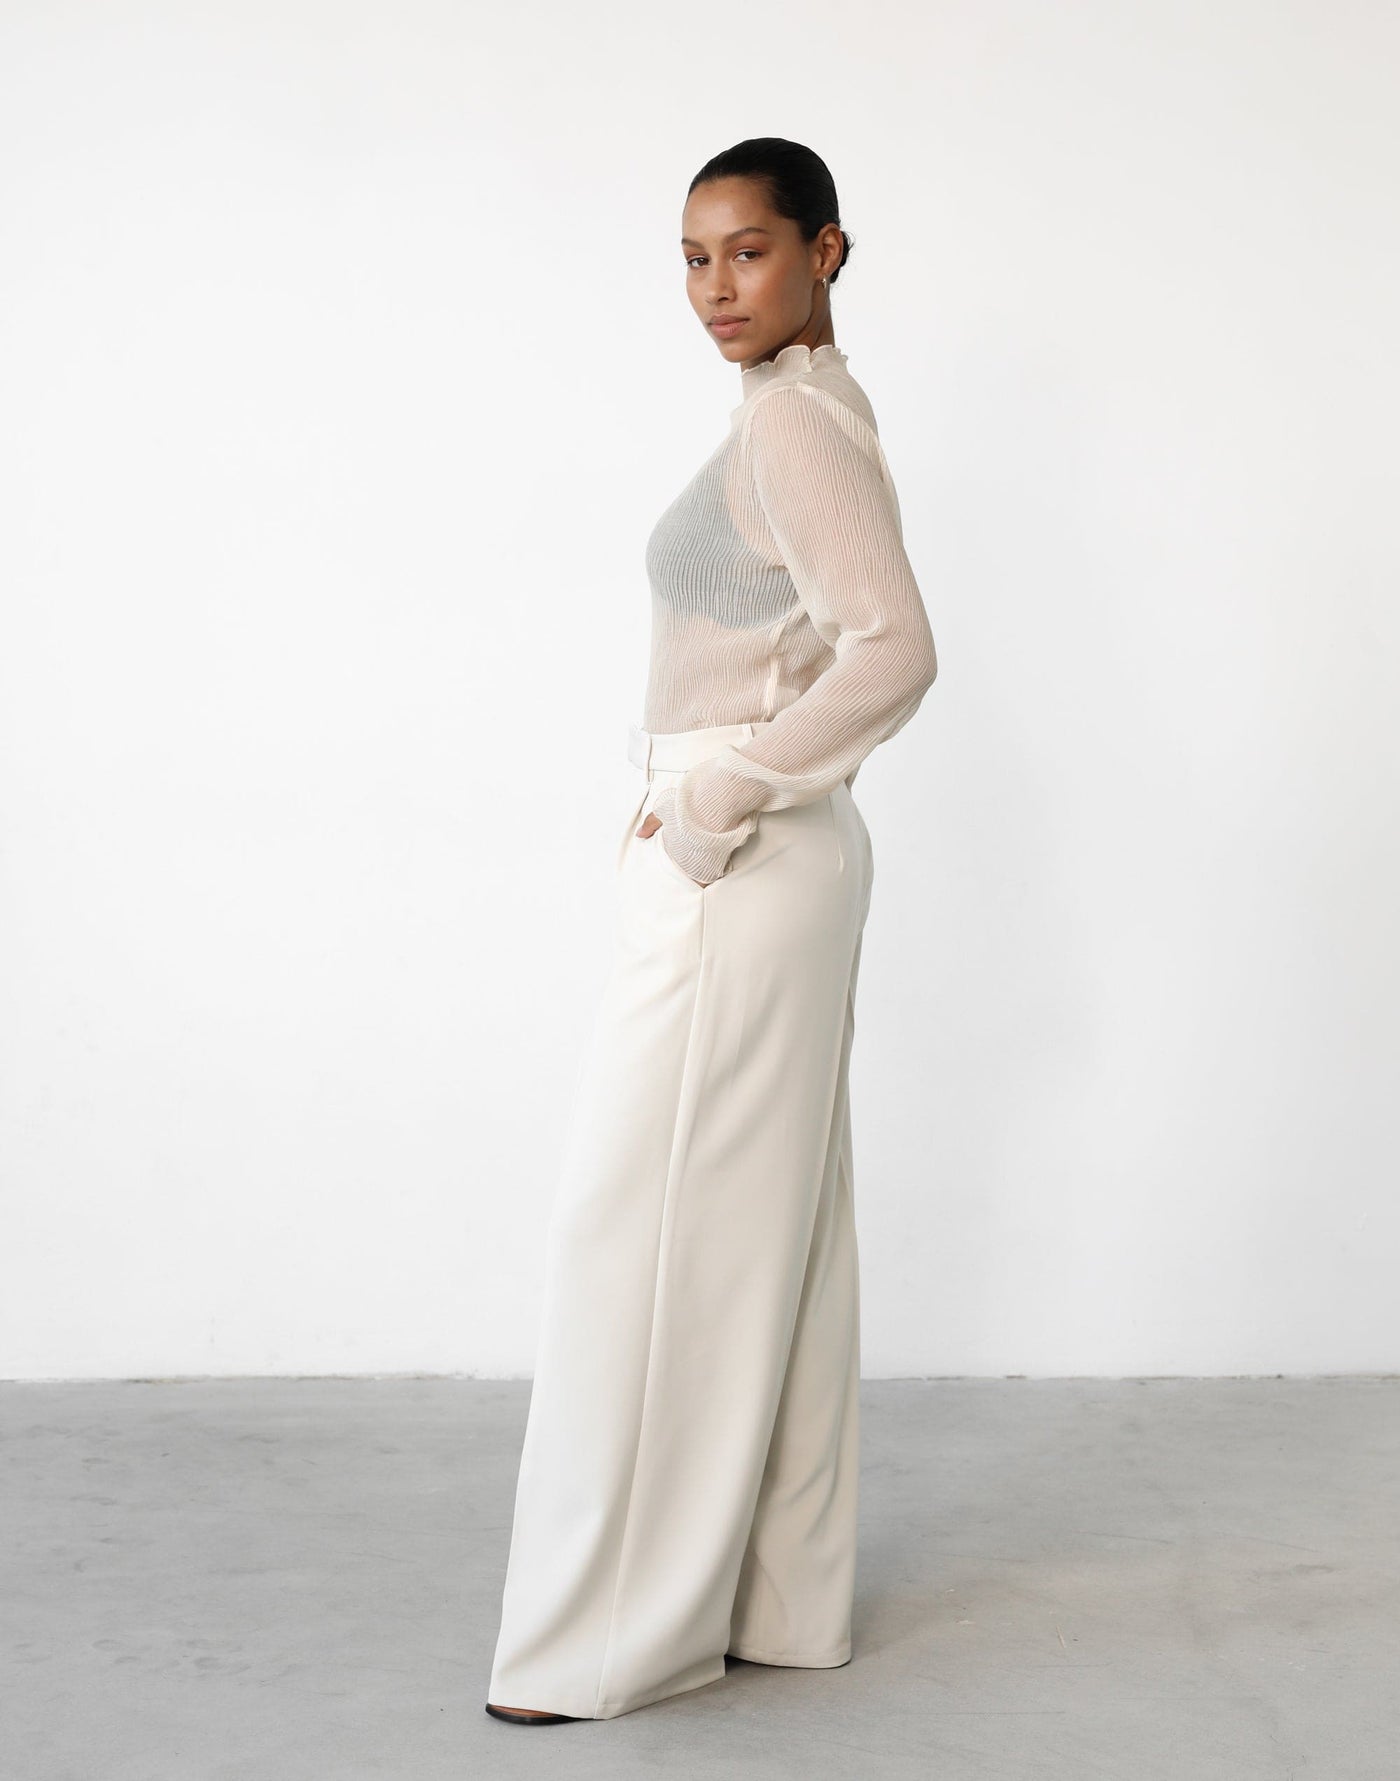 Vista Long Sleeve (Oat) - Oat Long Sleeve Top - Women's Top - Charcoal Clothing